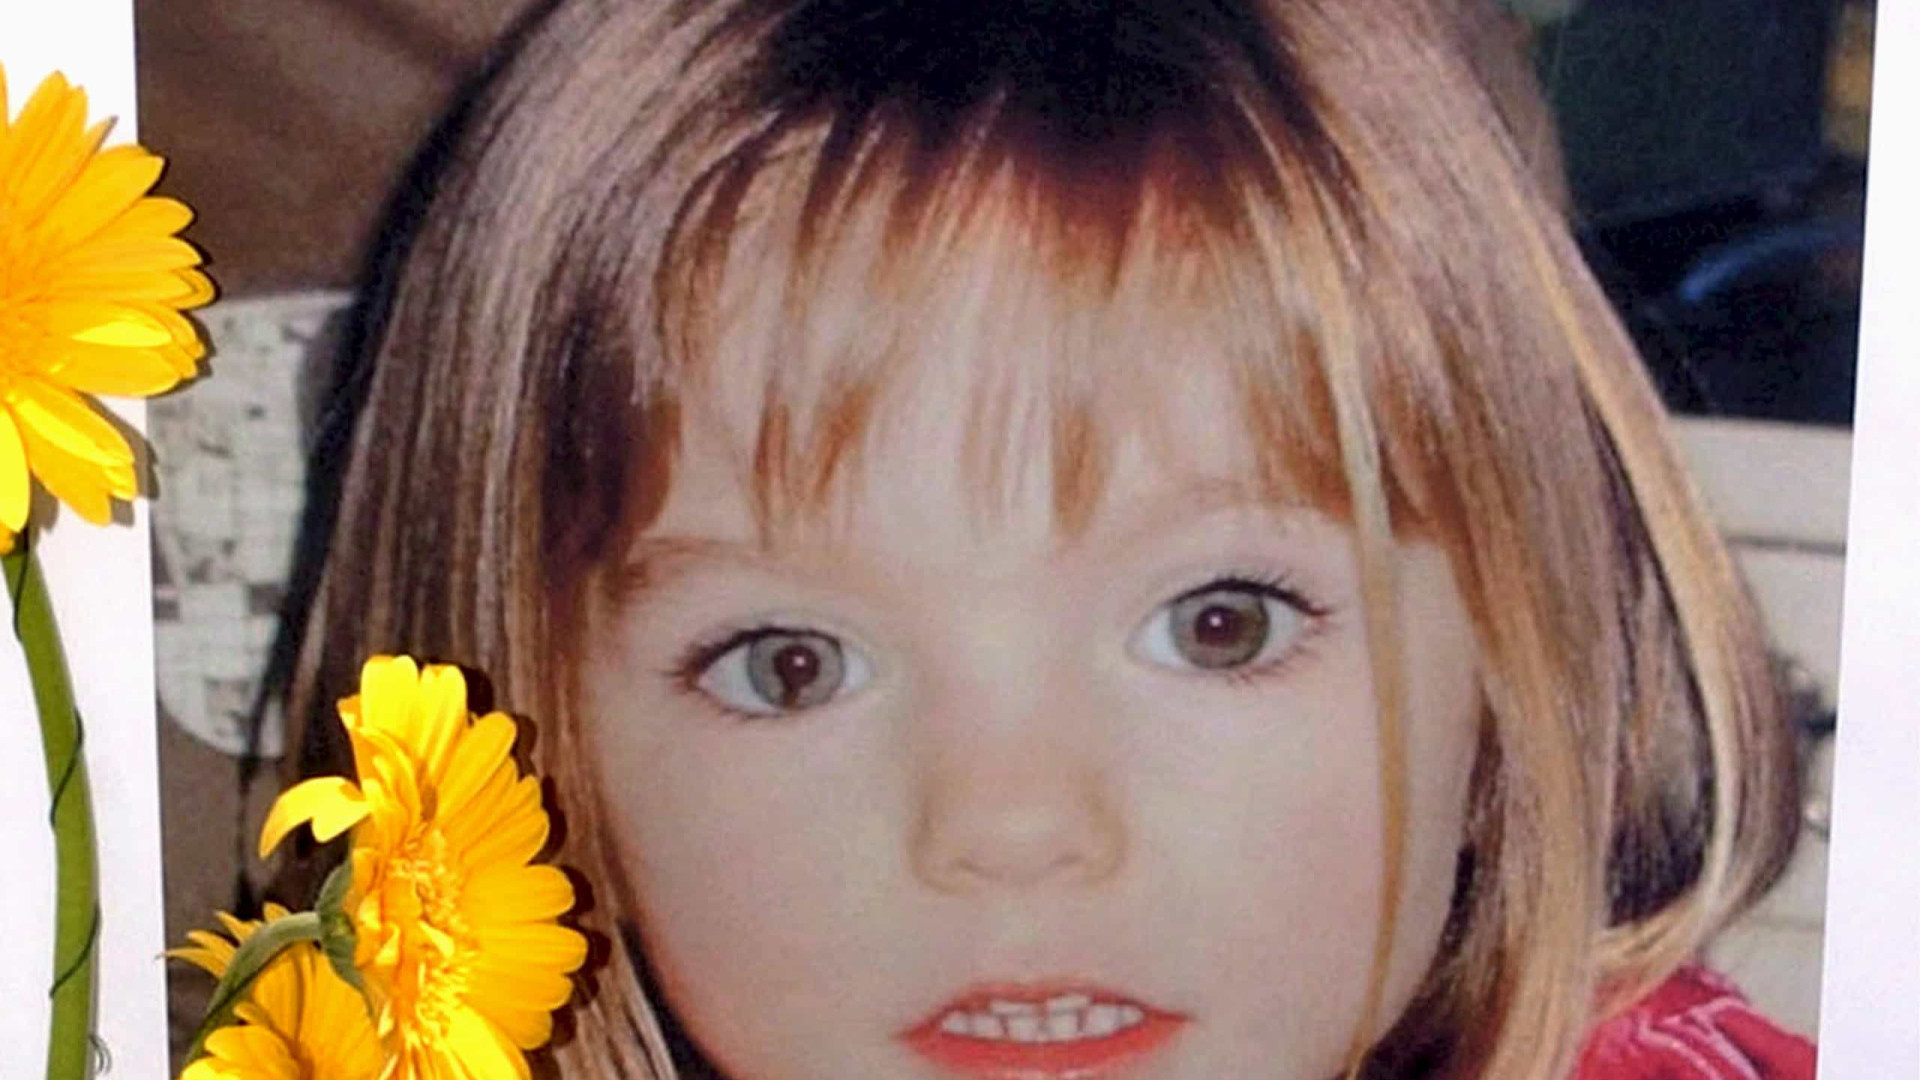 Preso suspeito de ter sequestrado Madeleine McCann 13 anos depois